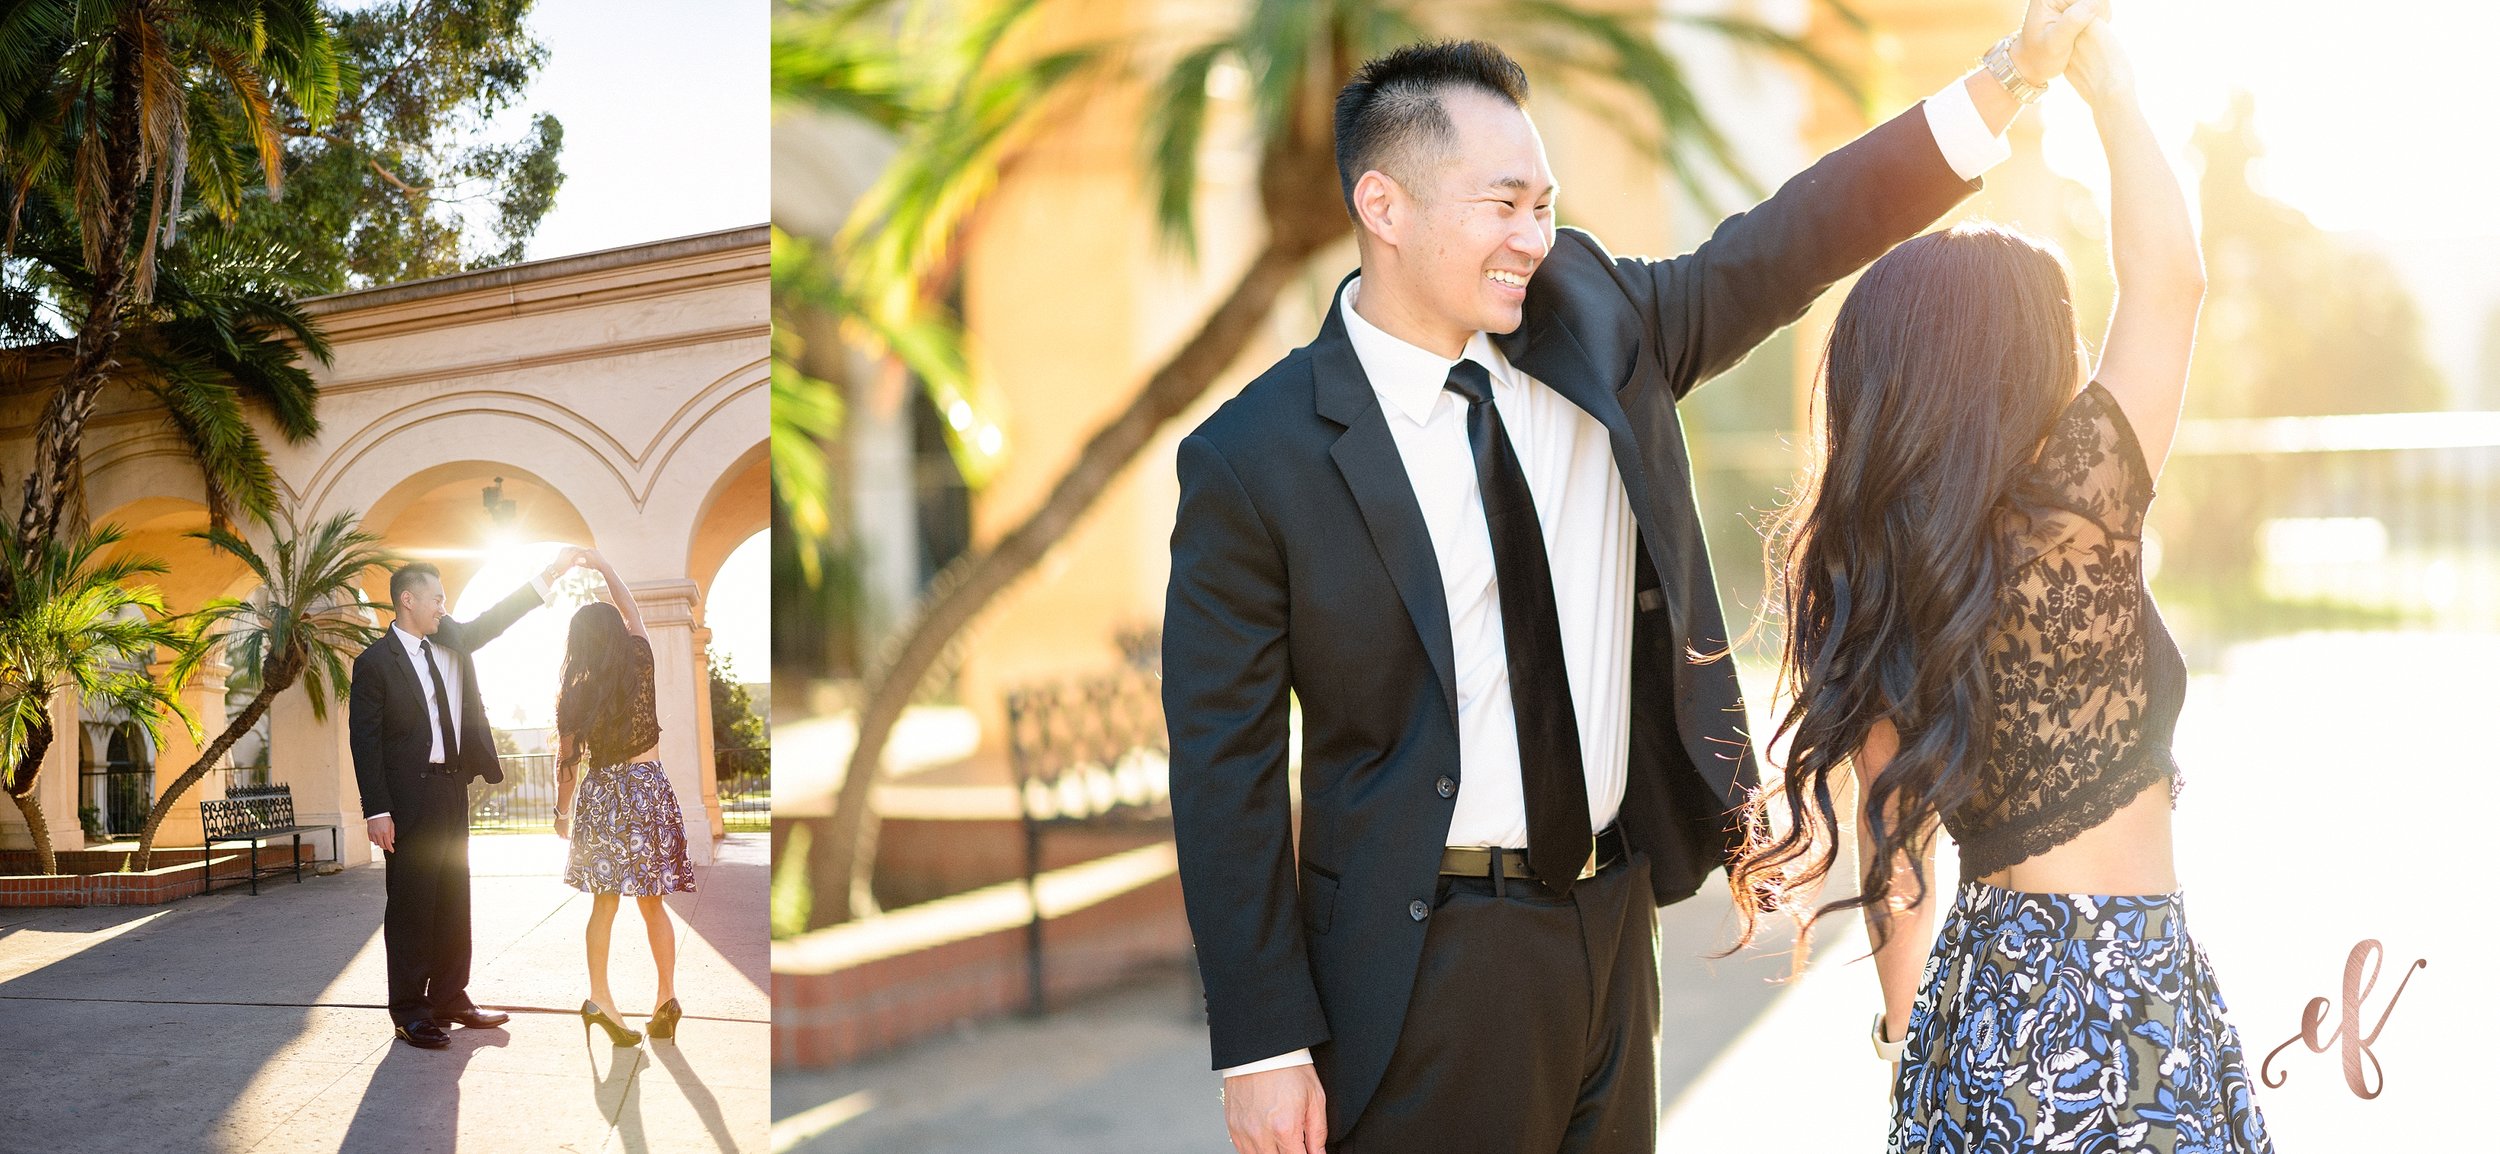 Balboa Park Engagement Photography | San Diego Portrait Photography 